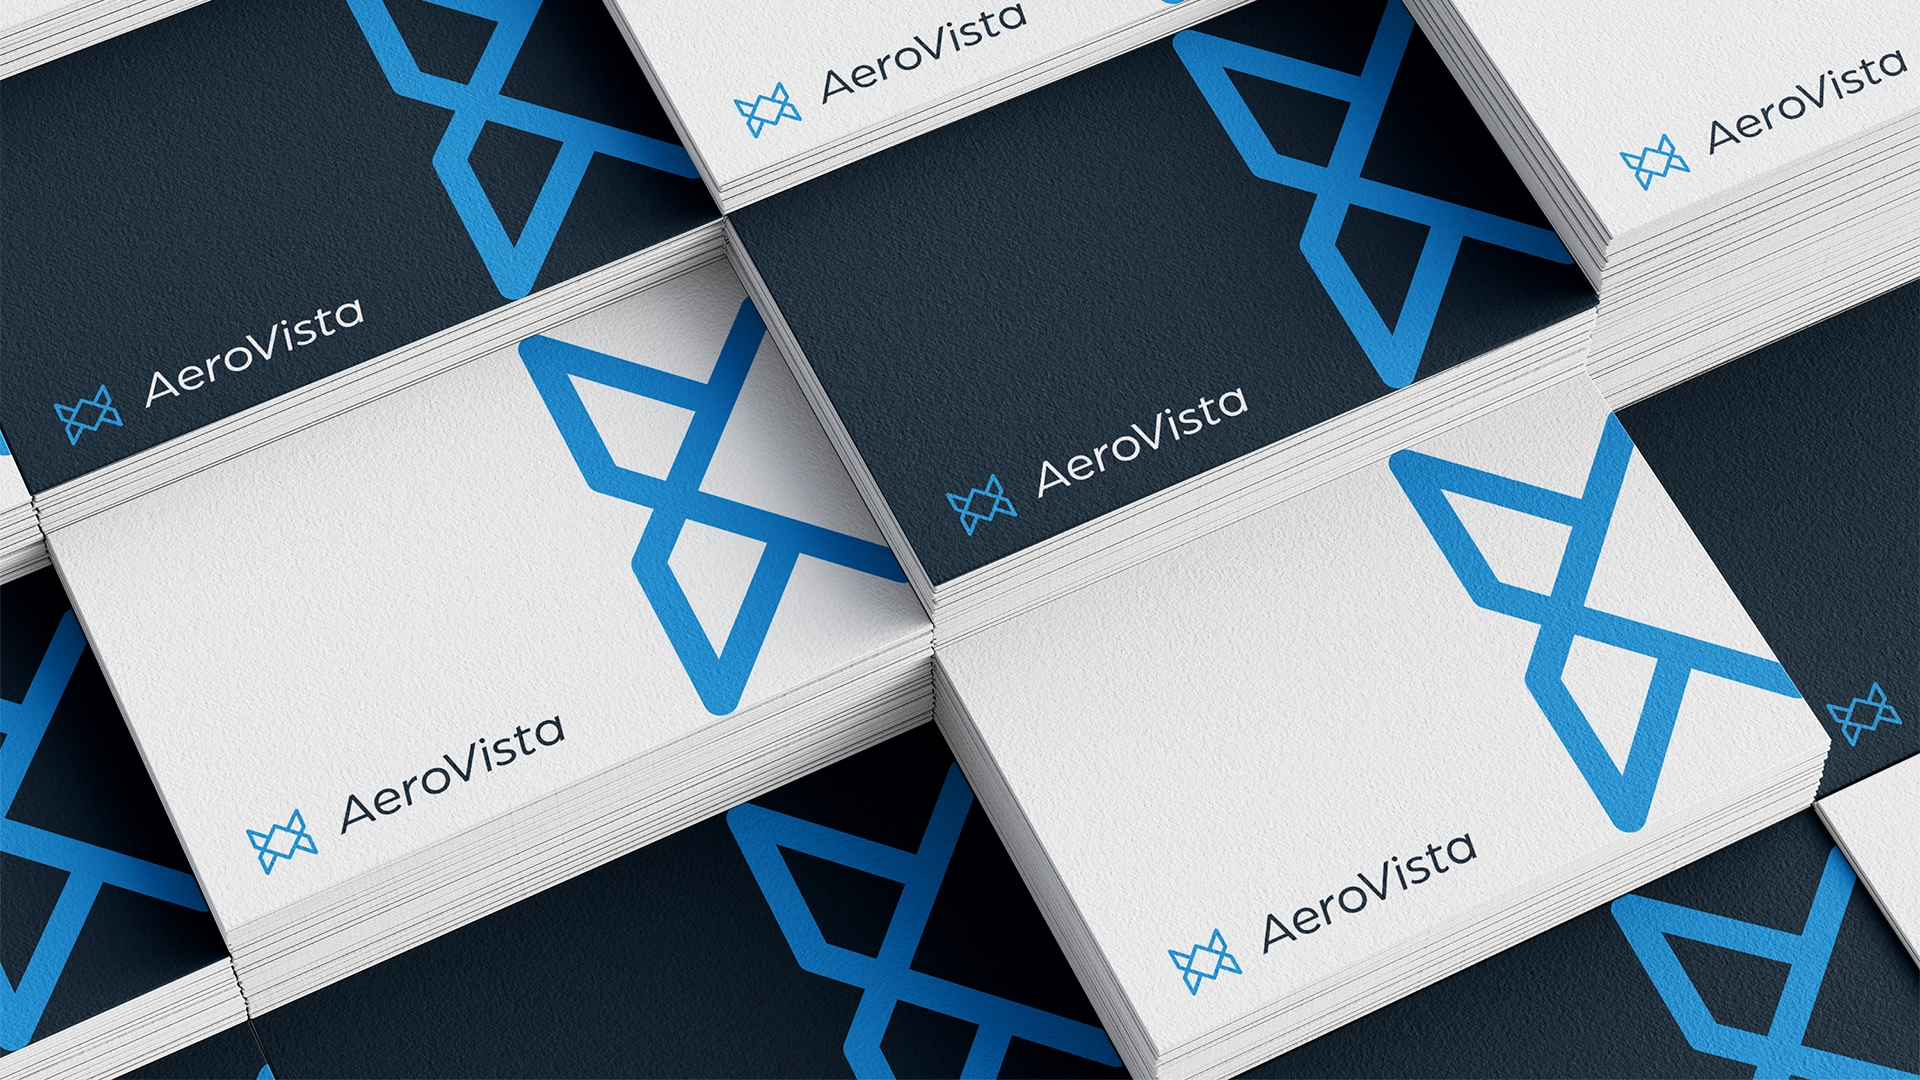 Aerovista's visual identity project case study